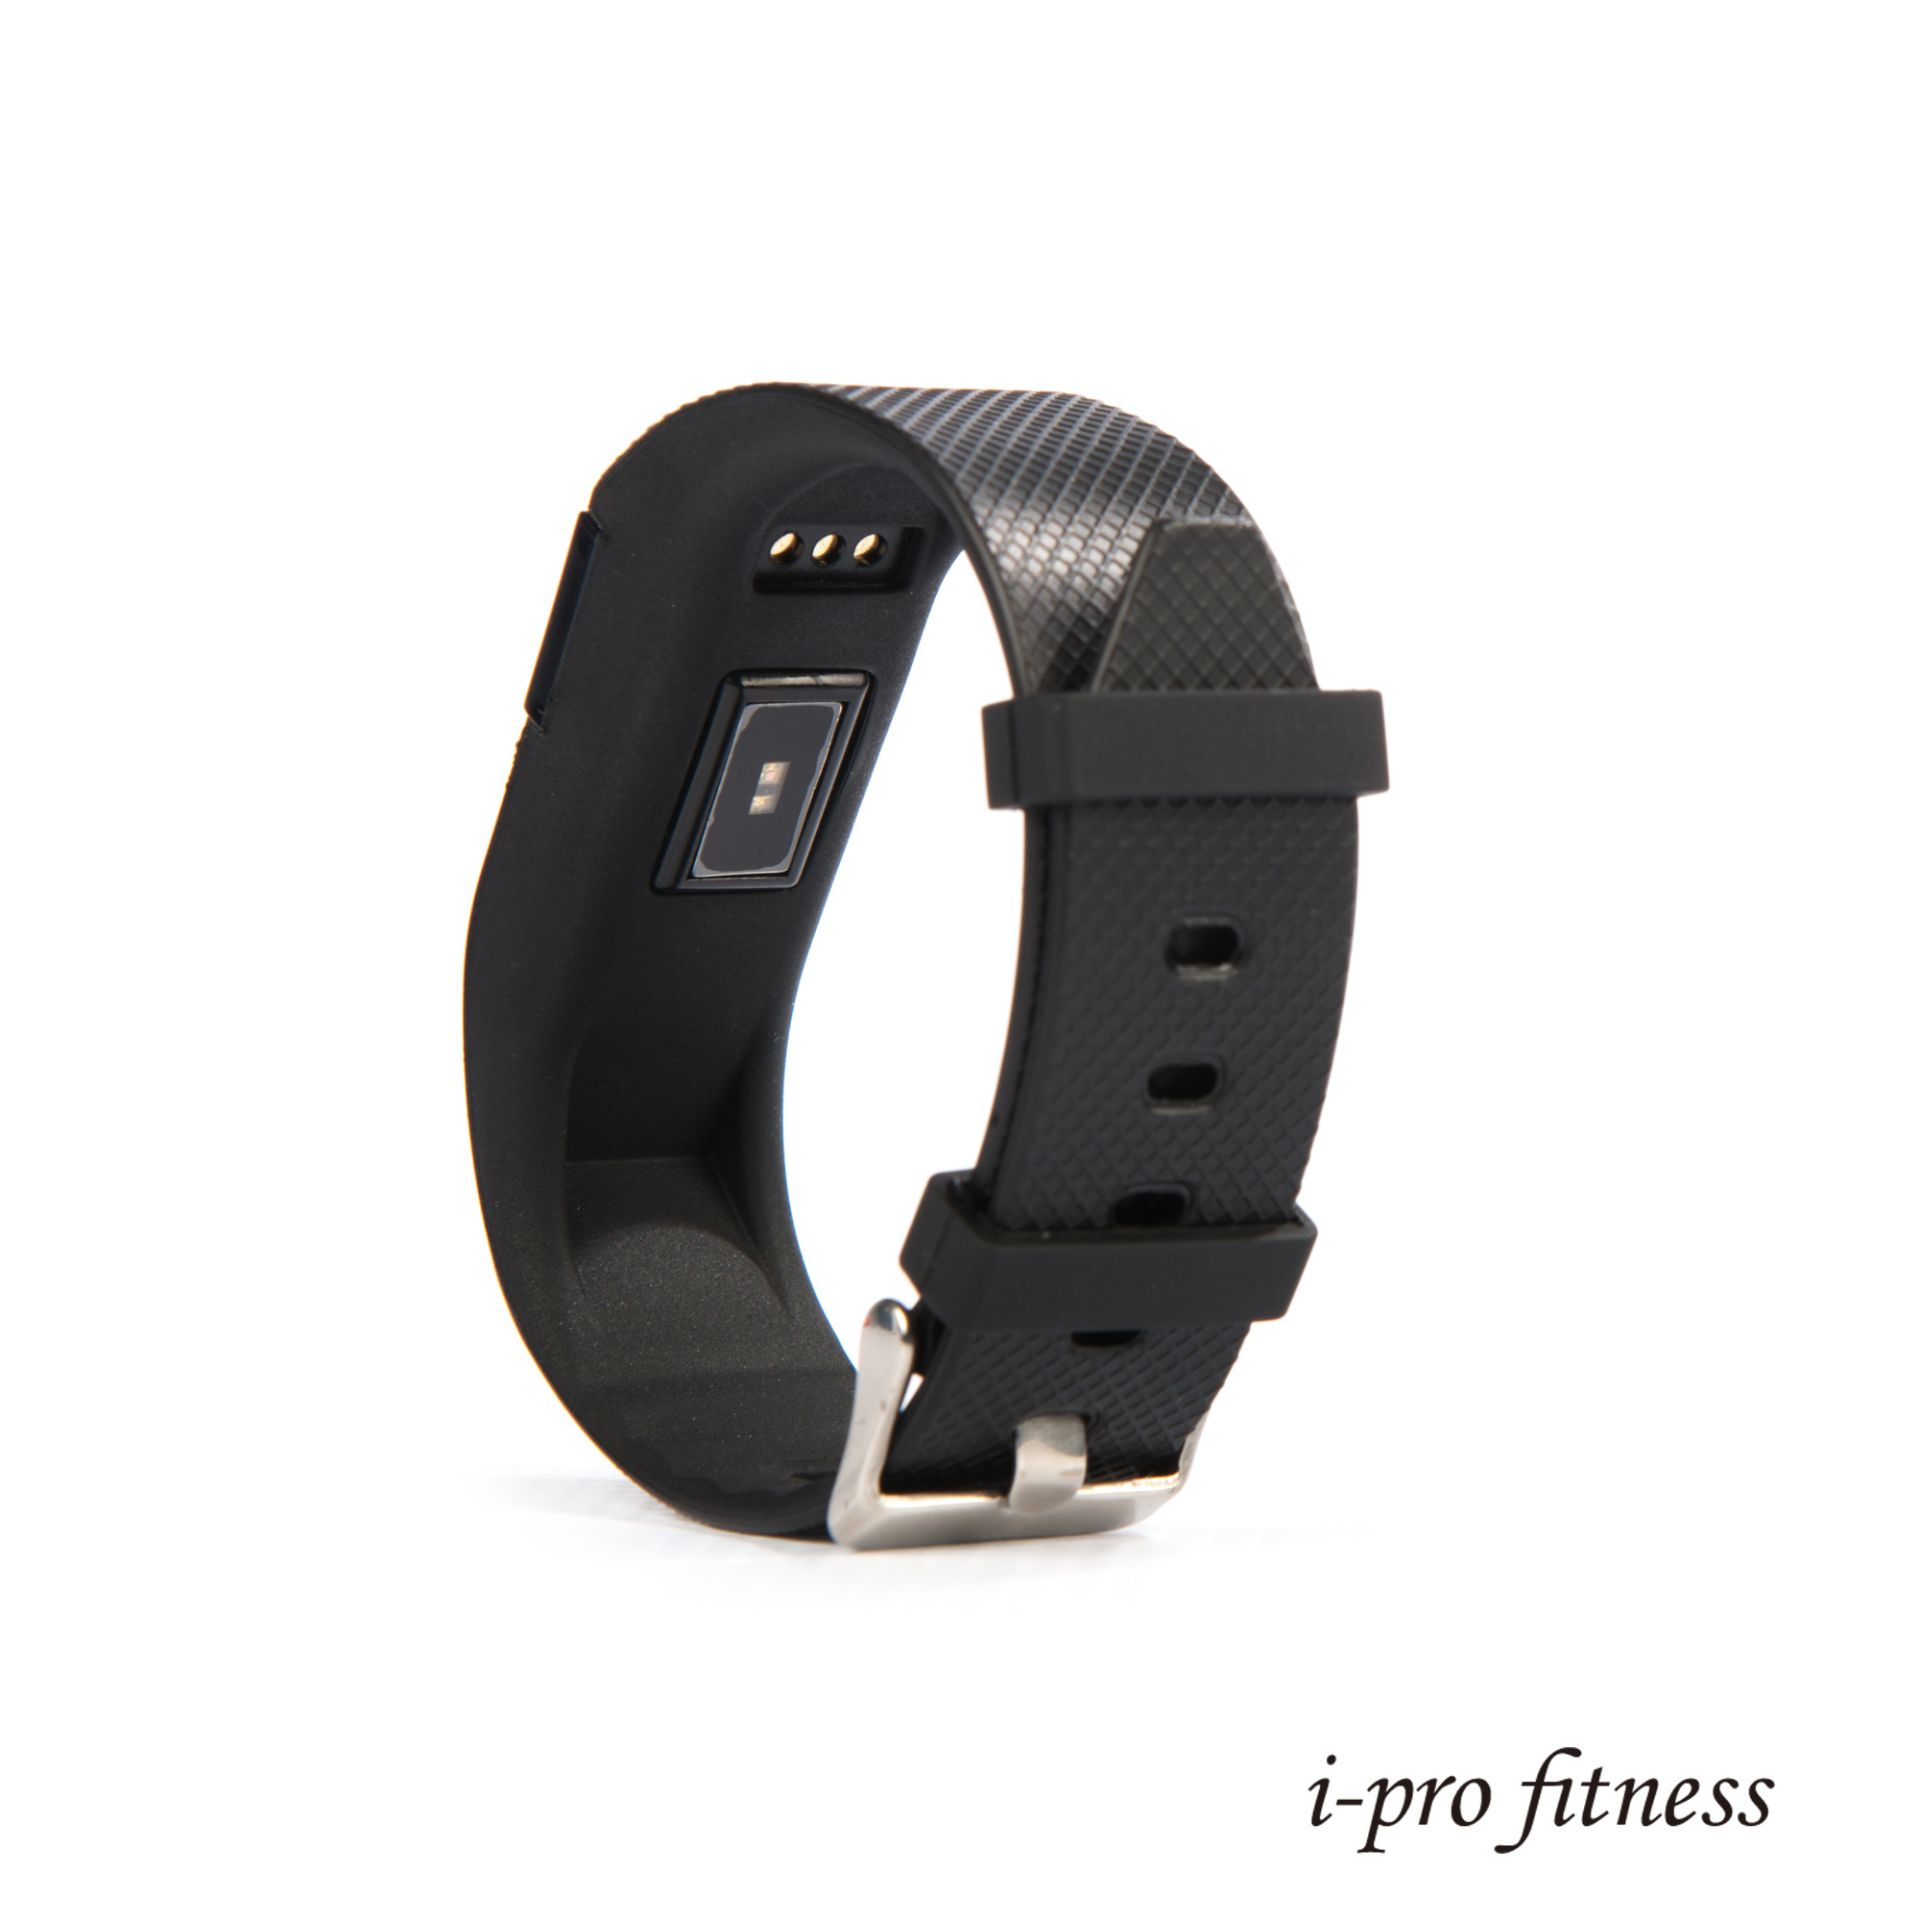 Trade lot 50 x Units Fitness Tracker i-pro fitness, Bluetooth 4.0 Sports Smart Bracelet*** Fitness - Image 8 of 8